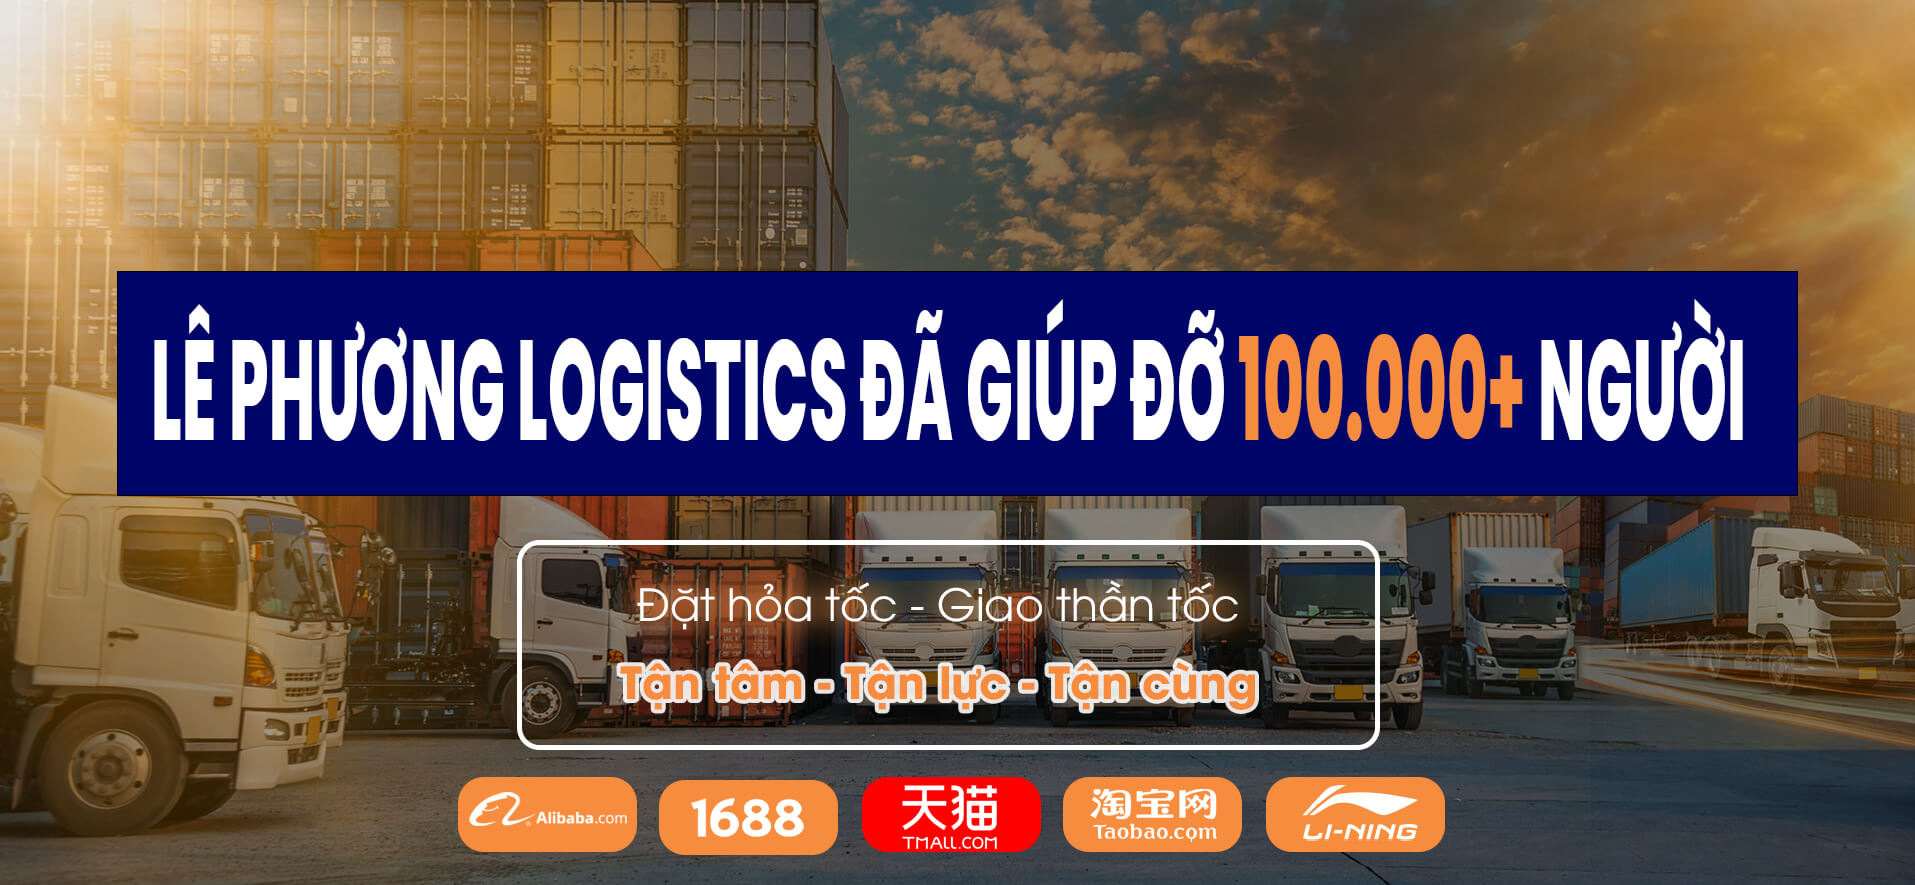 gioi-thieu-don-vi-le-phuong-logistics"